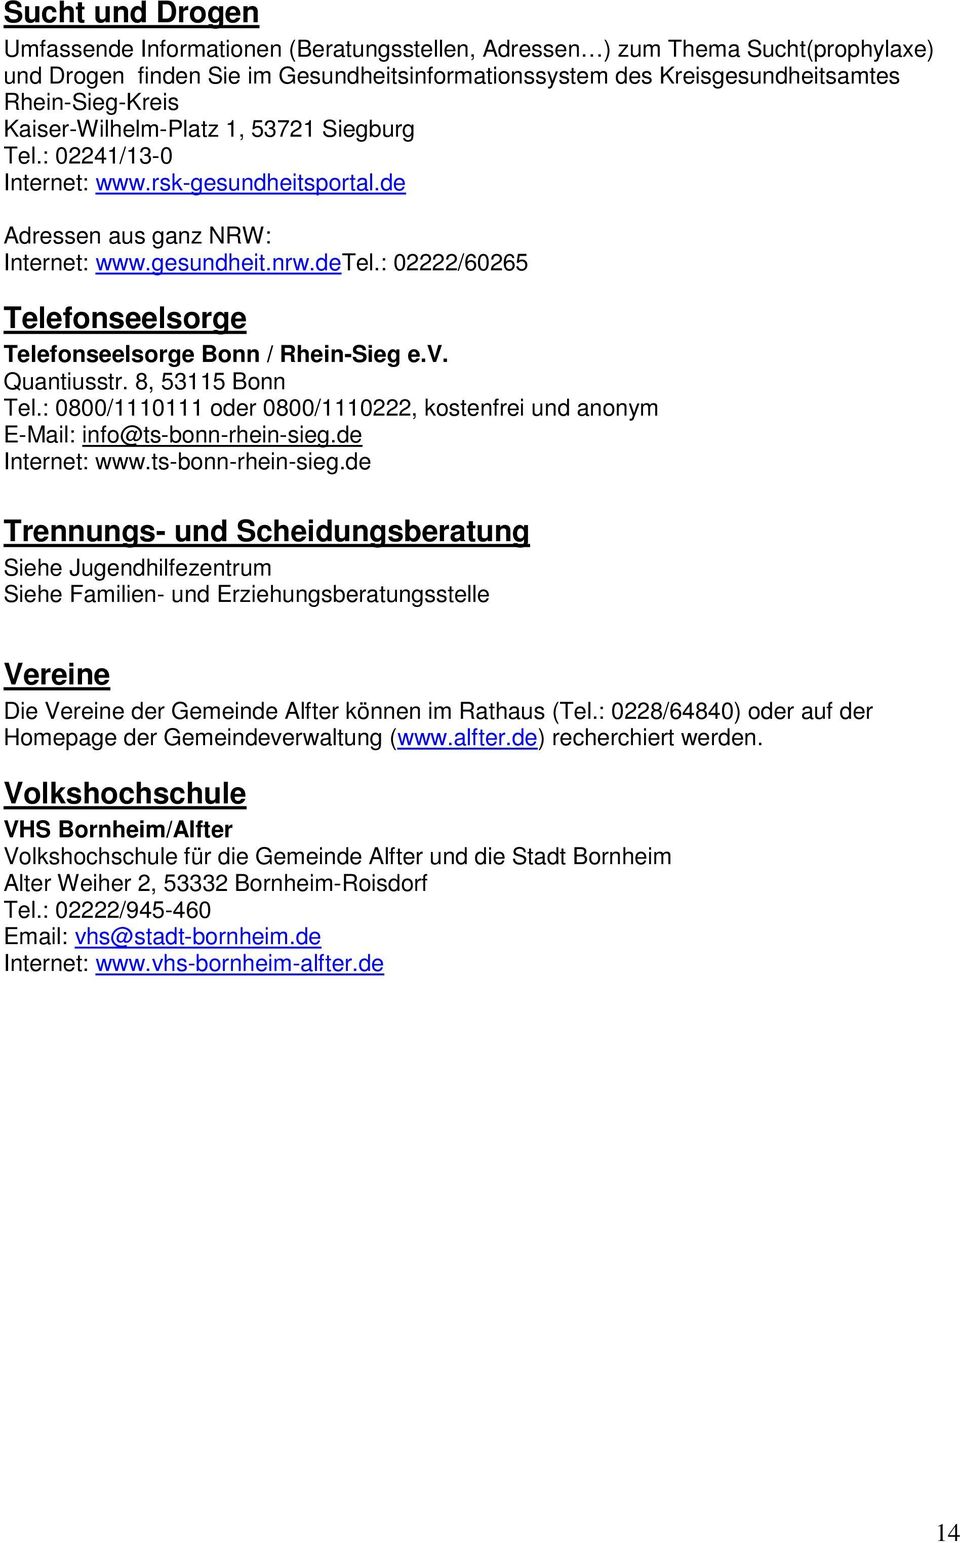 : 02222/60265 Telefonseelsorge Telefonseelsorge Bonn / Rhein-Sieg e.v. Quantiusstr. 8, 53115 Bonn Tel.: 0800/1110111 oder 0800/1110222, kostenfrei und anonym E-Mail: info@ts-bonn-rhein-sieg.